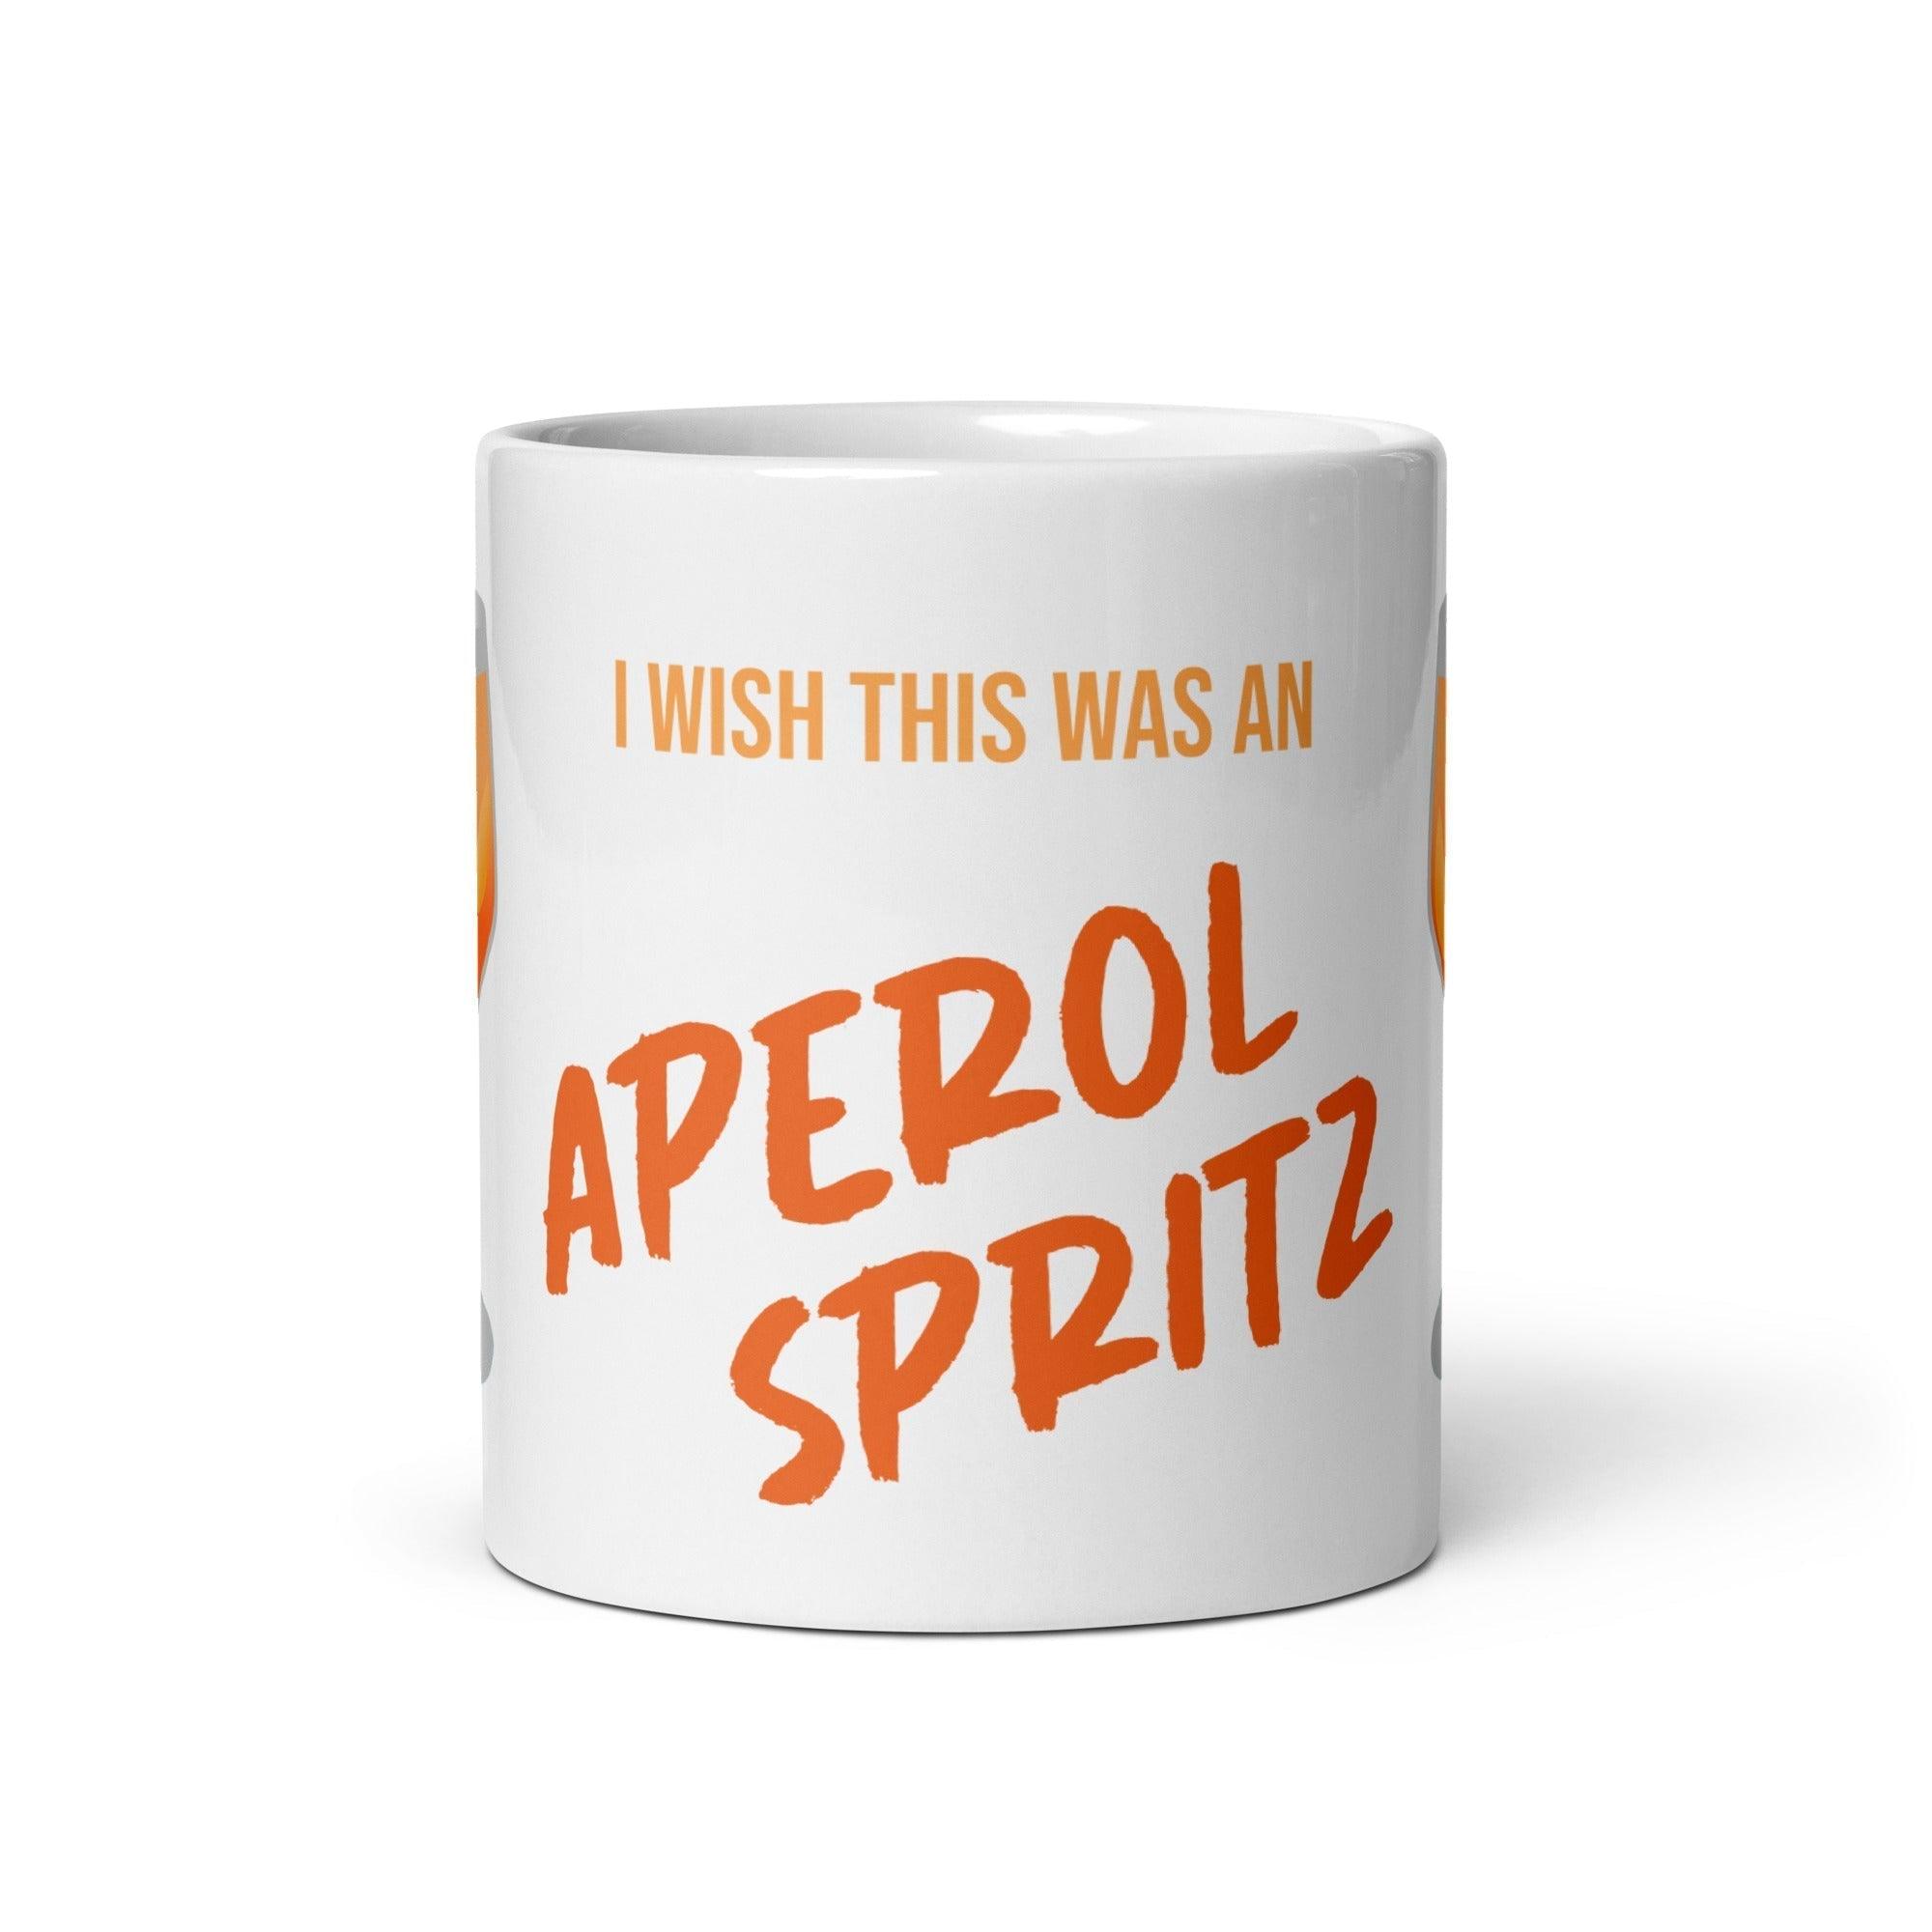 Wish This Was An Aperol Spritz Mug Polychrome Goods